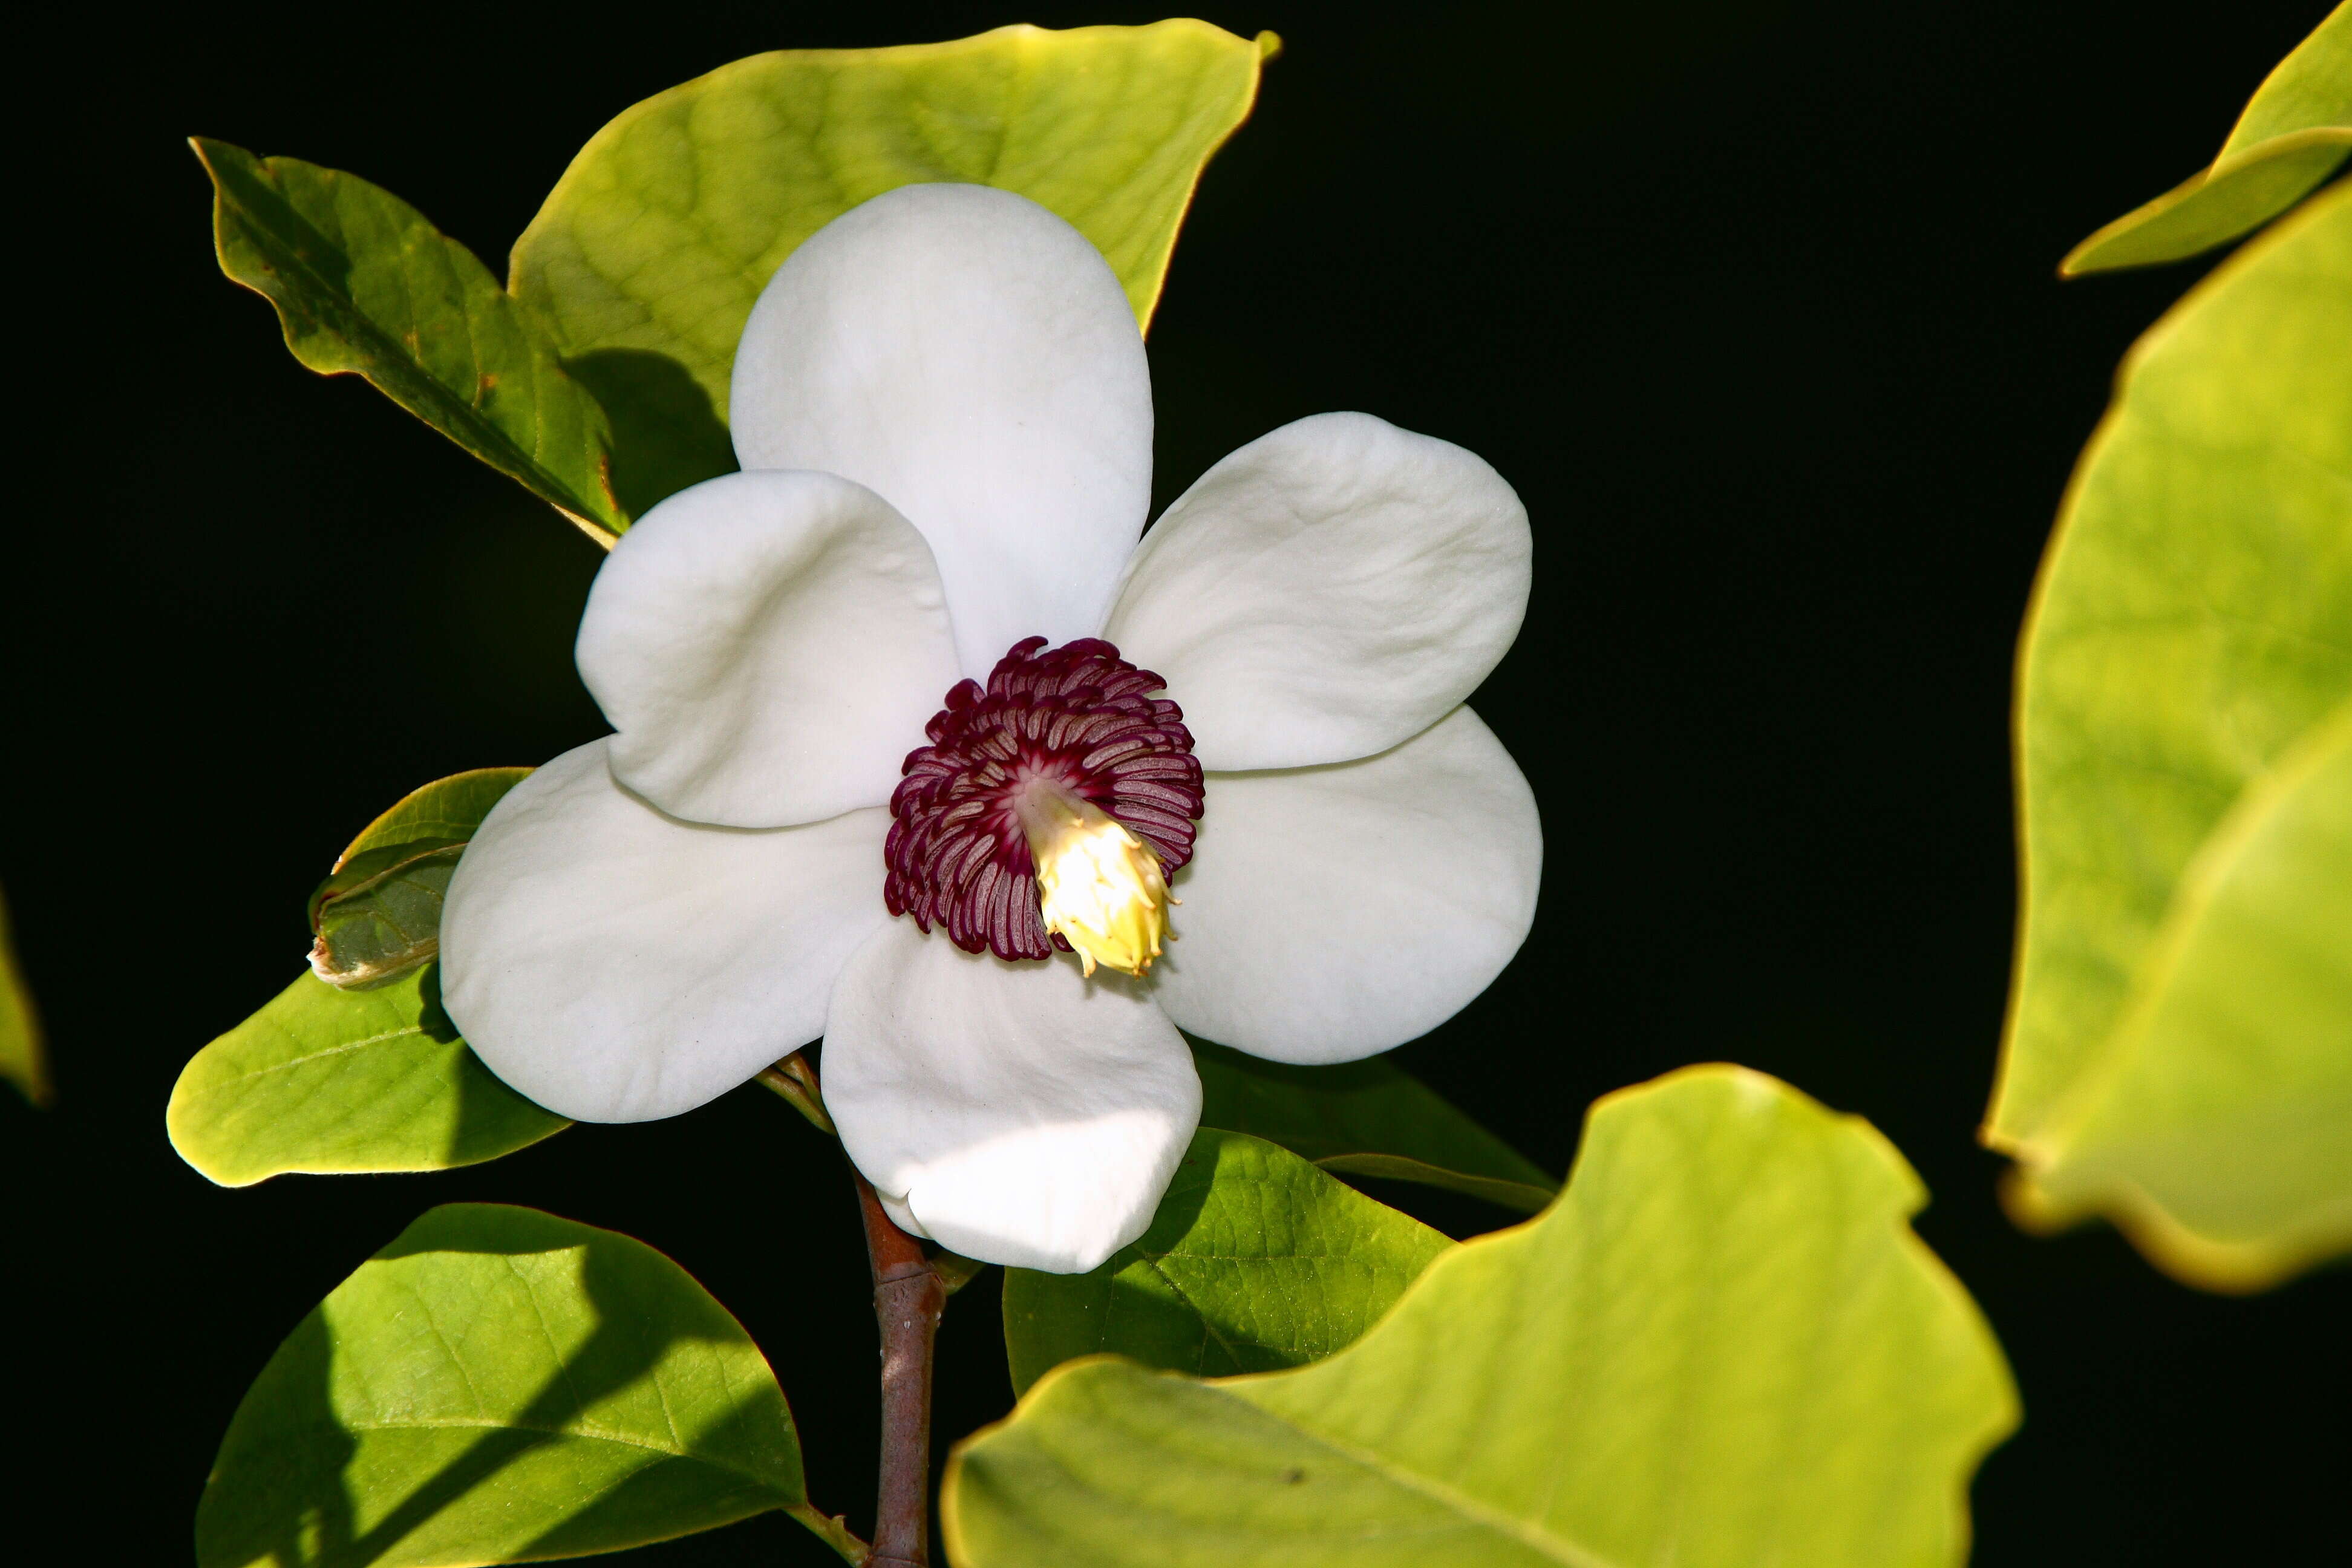 Image of Magnolia sieboldii K. Koch